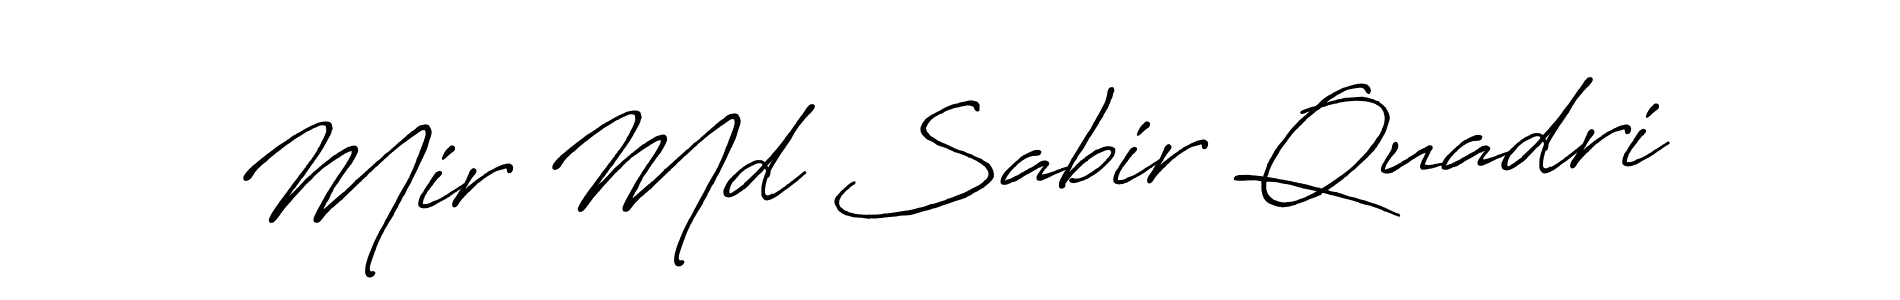 How to Draw Mir Md Sabir Quadri signature style? Antro_Vectra_Bolder is a latest design signature styles for name Mir Md Sabir Quadri. Mir Md Sabir Quadri signature style 7 images and pictures png